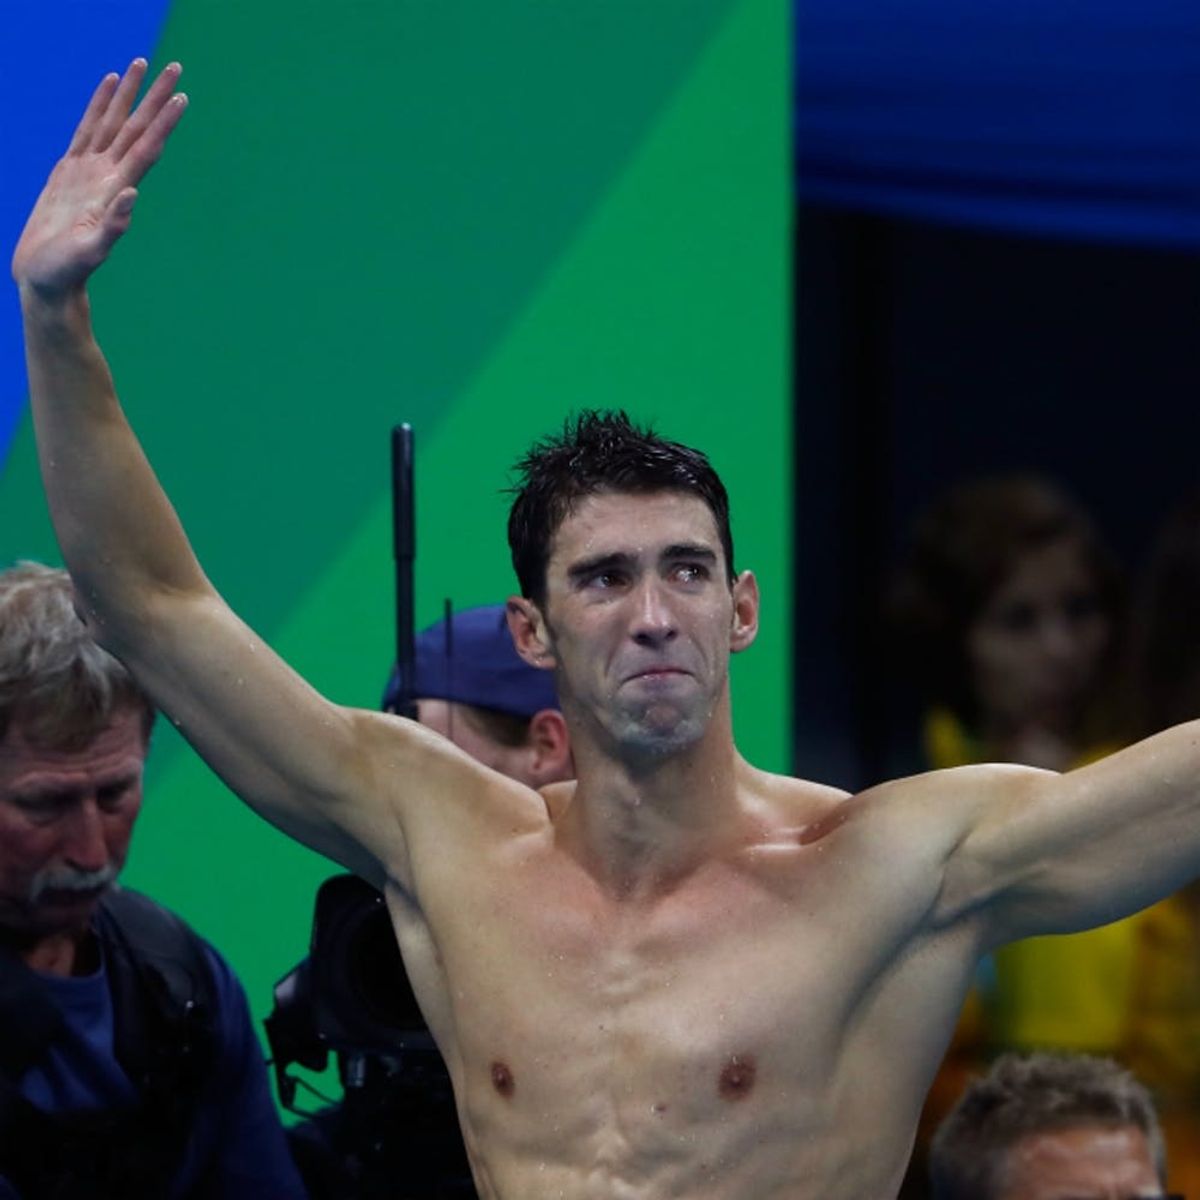 Michael Phelps Explains His Game Face